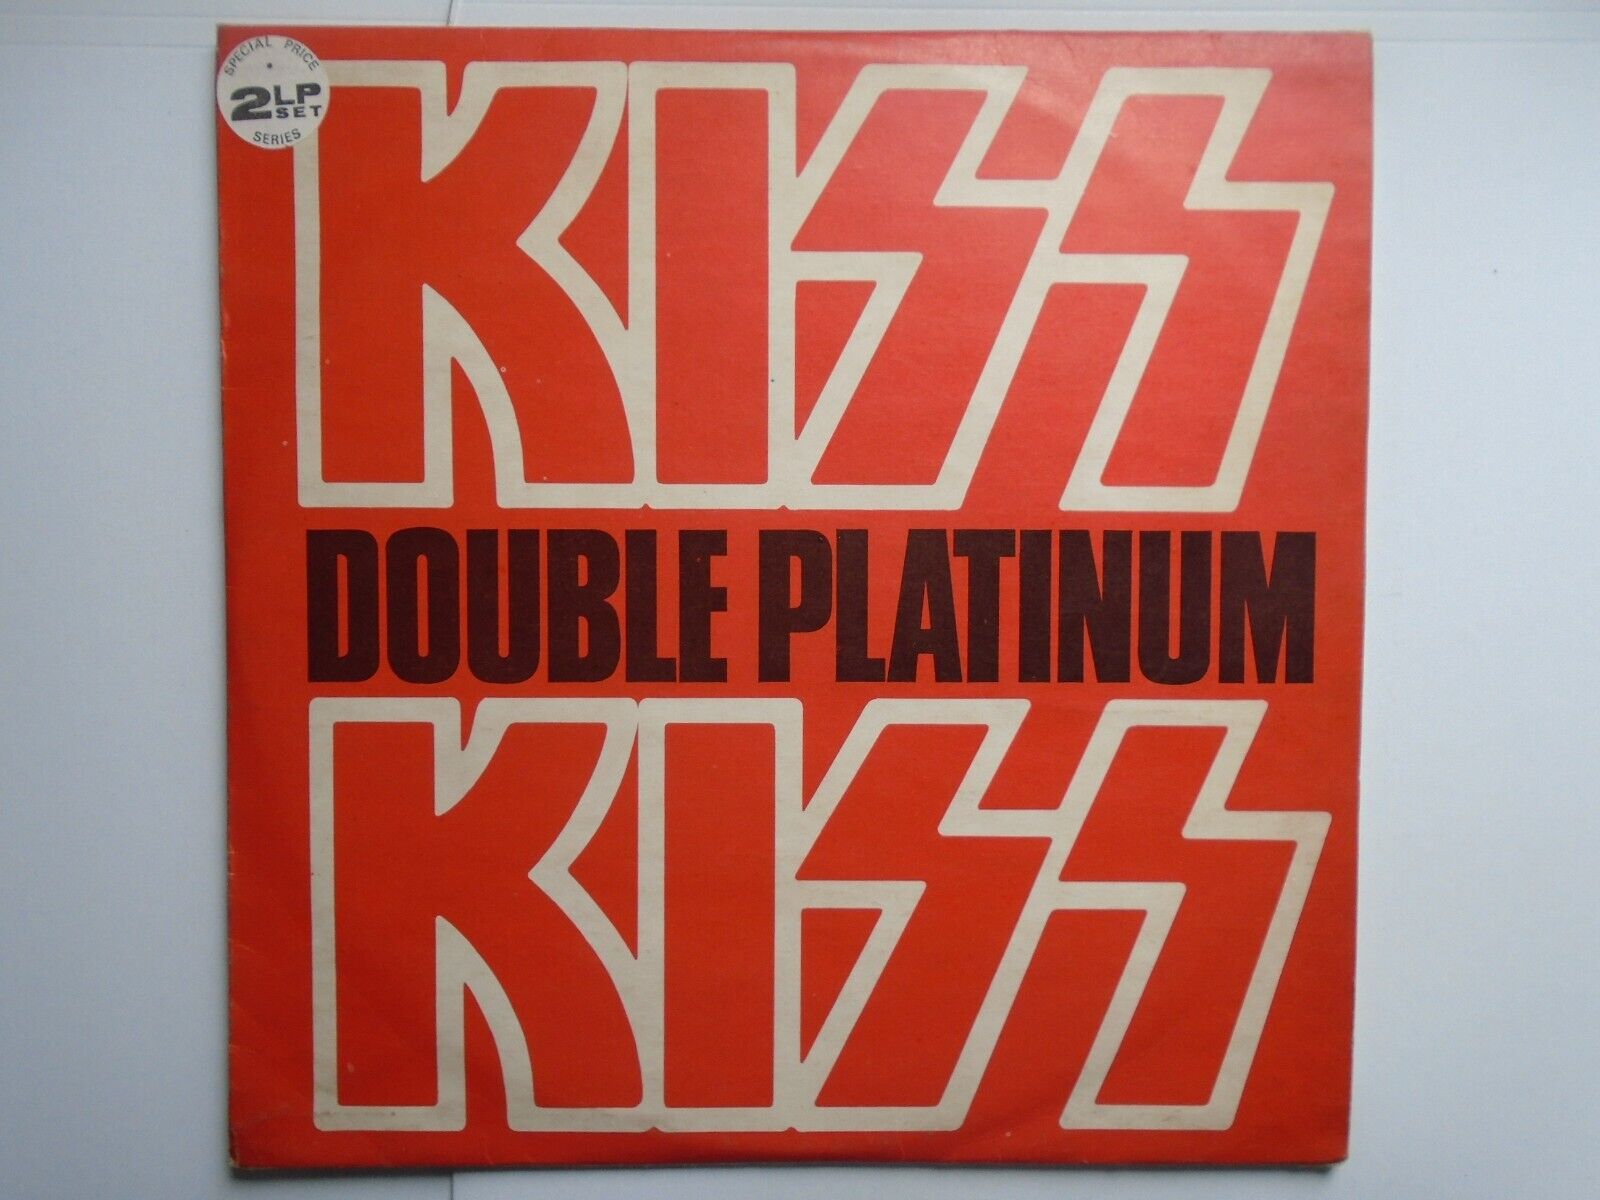 KISS - DOUBLE PLATINUM VINYL LP RARE RHODESIA NBL77001 1978 HARD ROCK COMP.